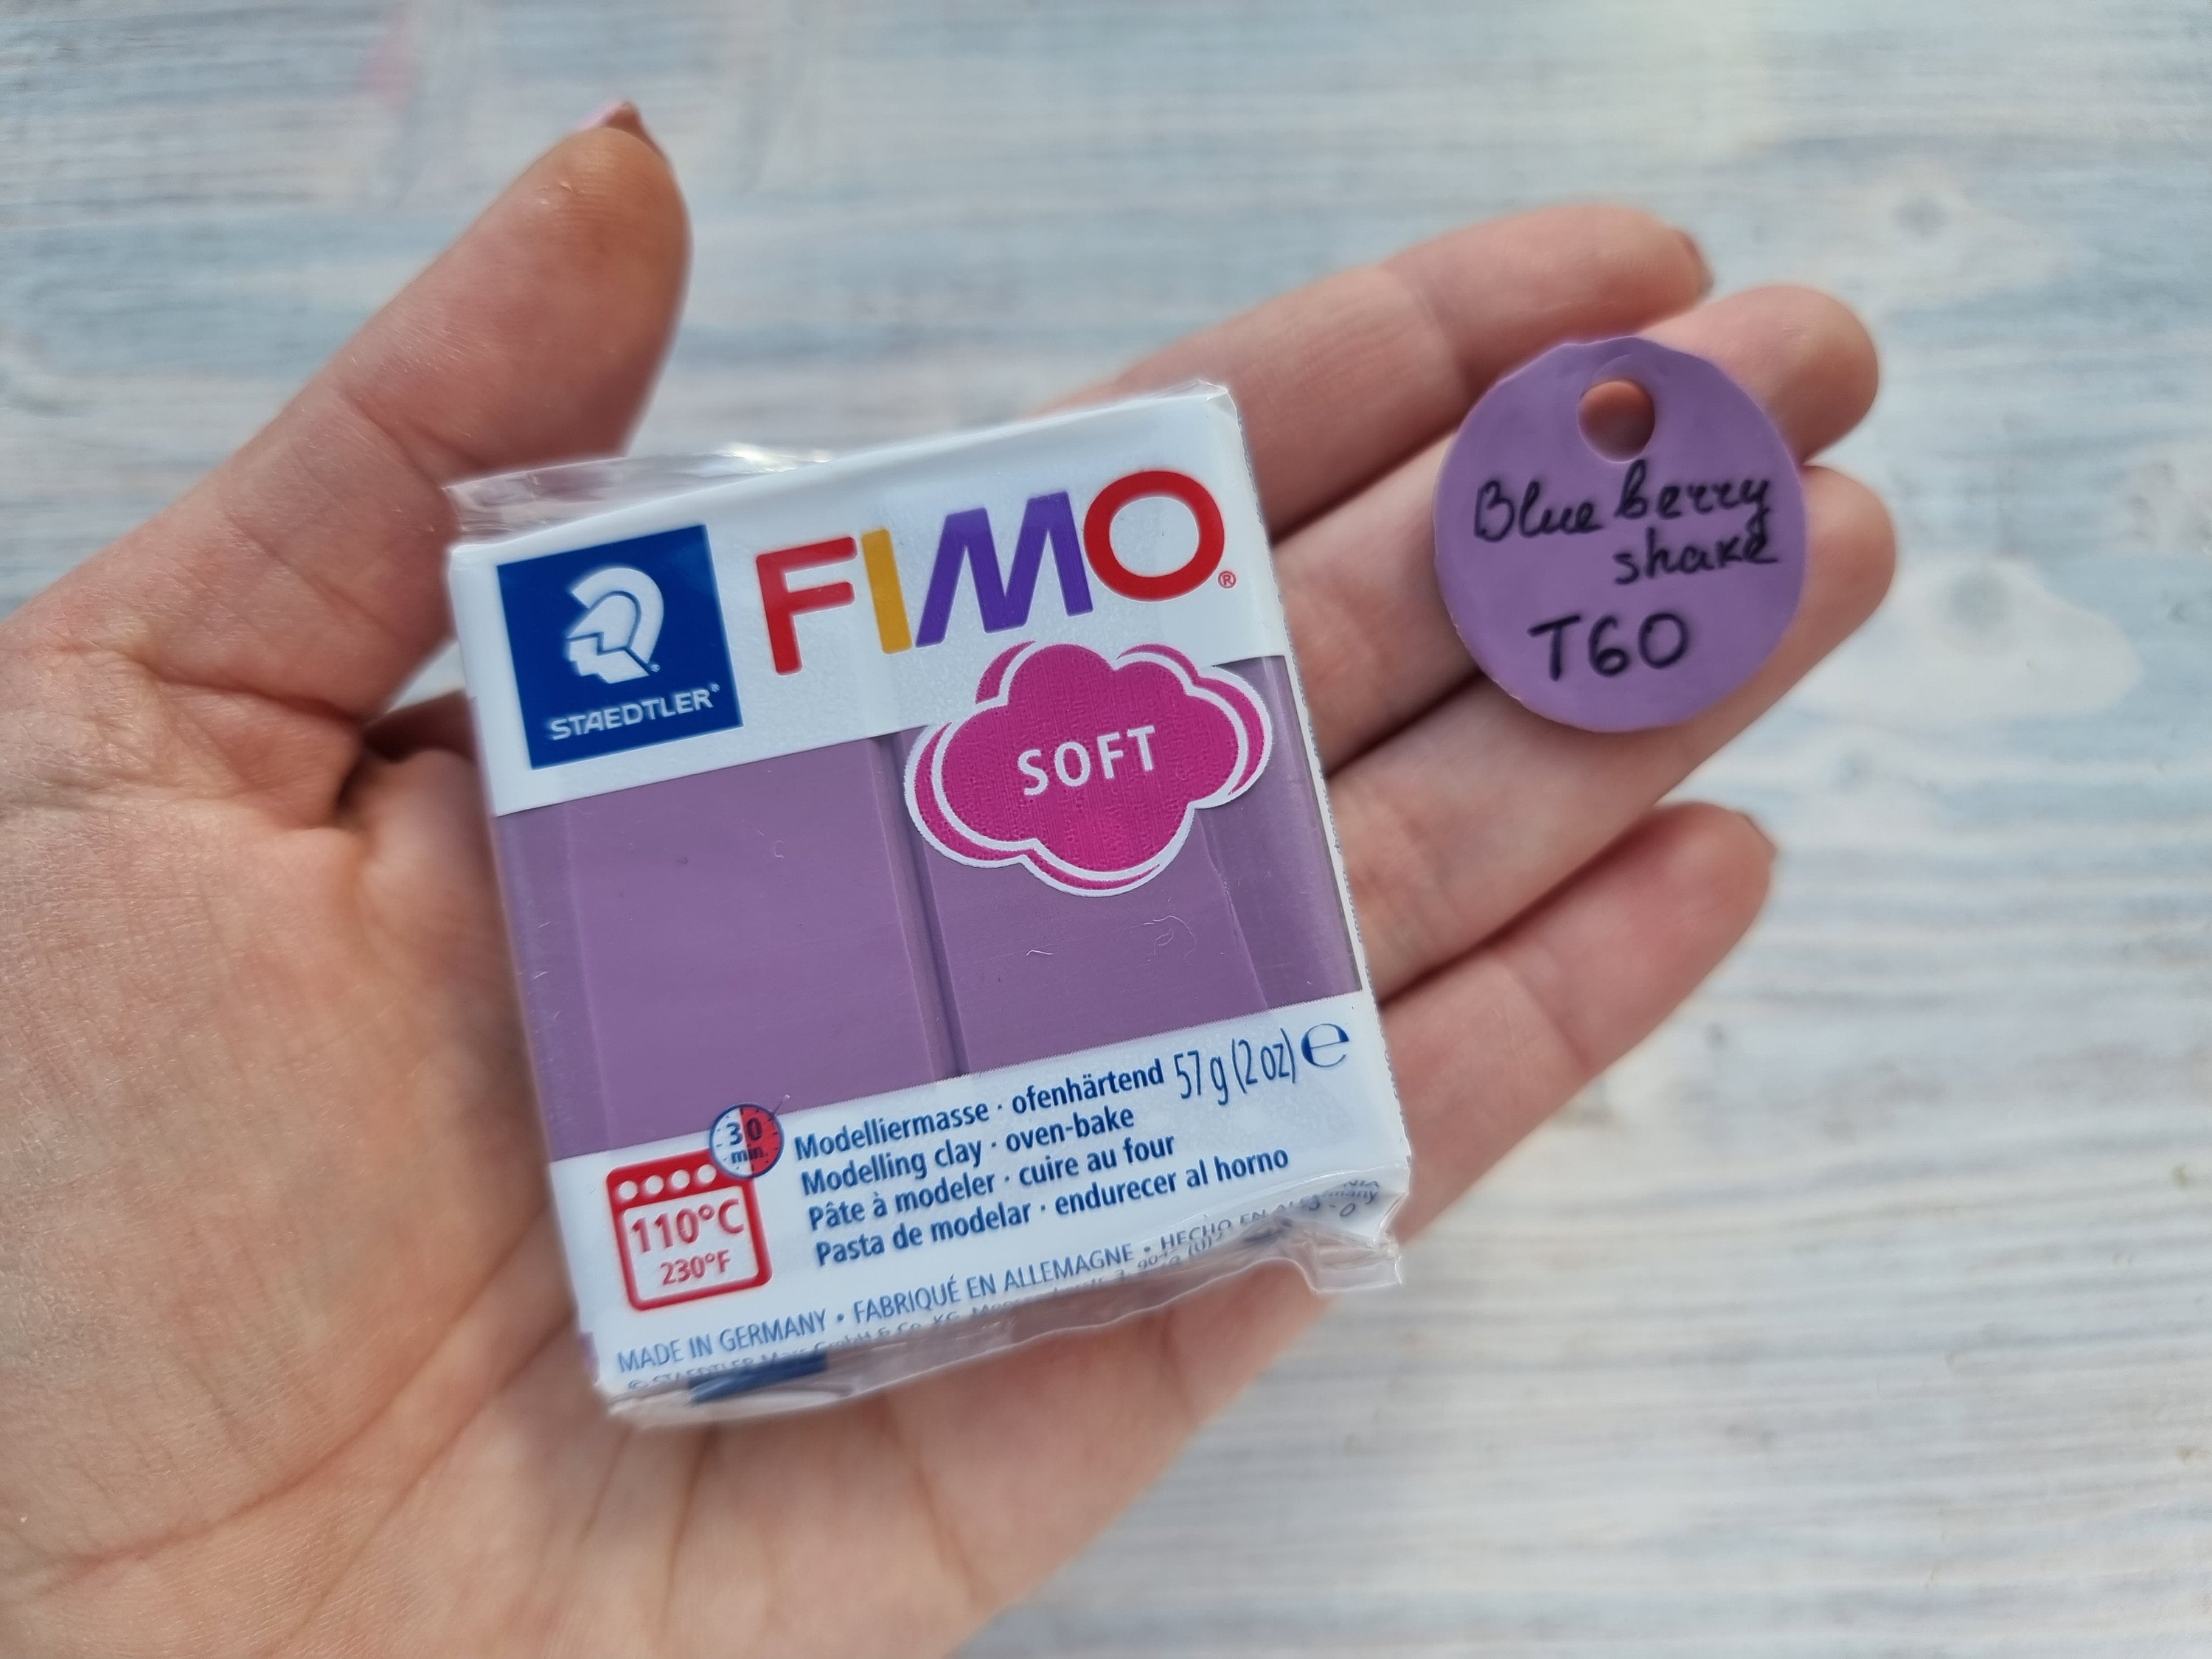 Arcilla polimérica serie FIMO Soft, batido de arándanos, nr. T60, 57 g 2  oz, arcilla polimérica para modelar que se endurece al horno, colores Basic Fimo  Soft de STAEDTLER -  México